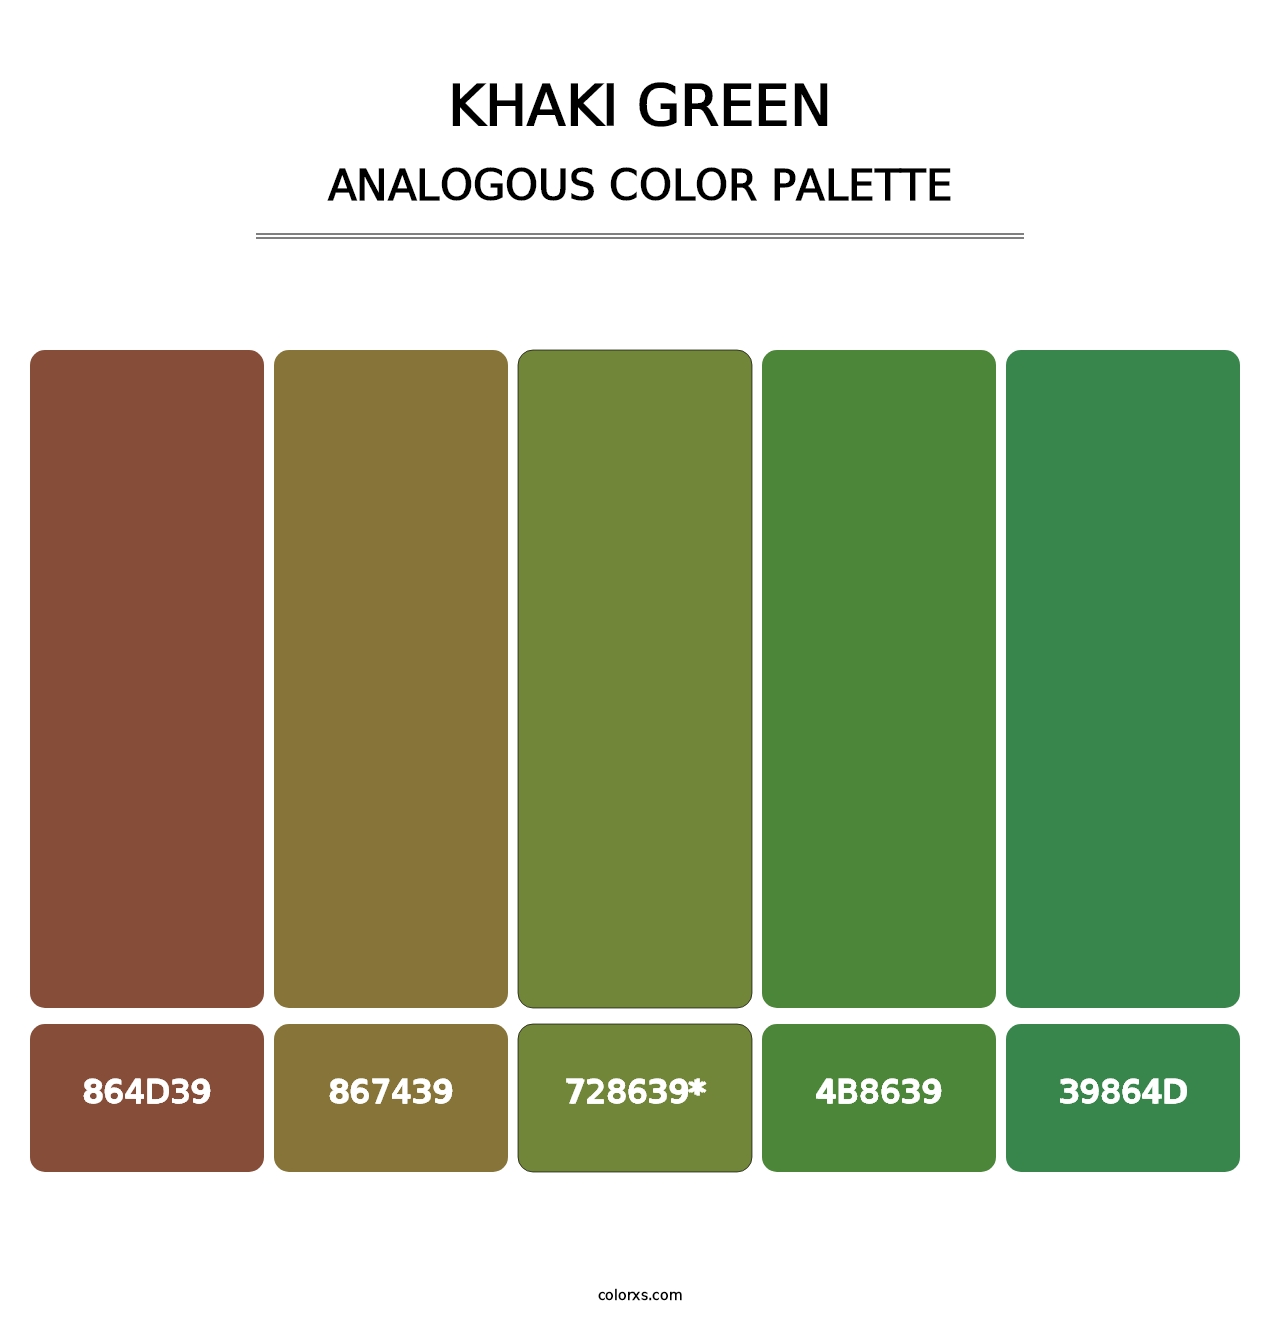 Khaki Green - Analogous Color Palette